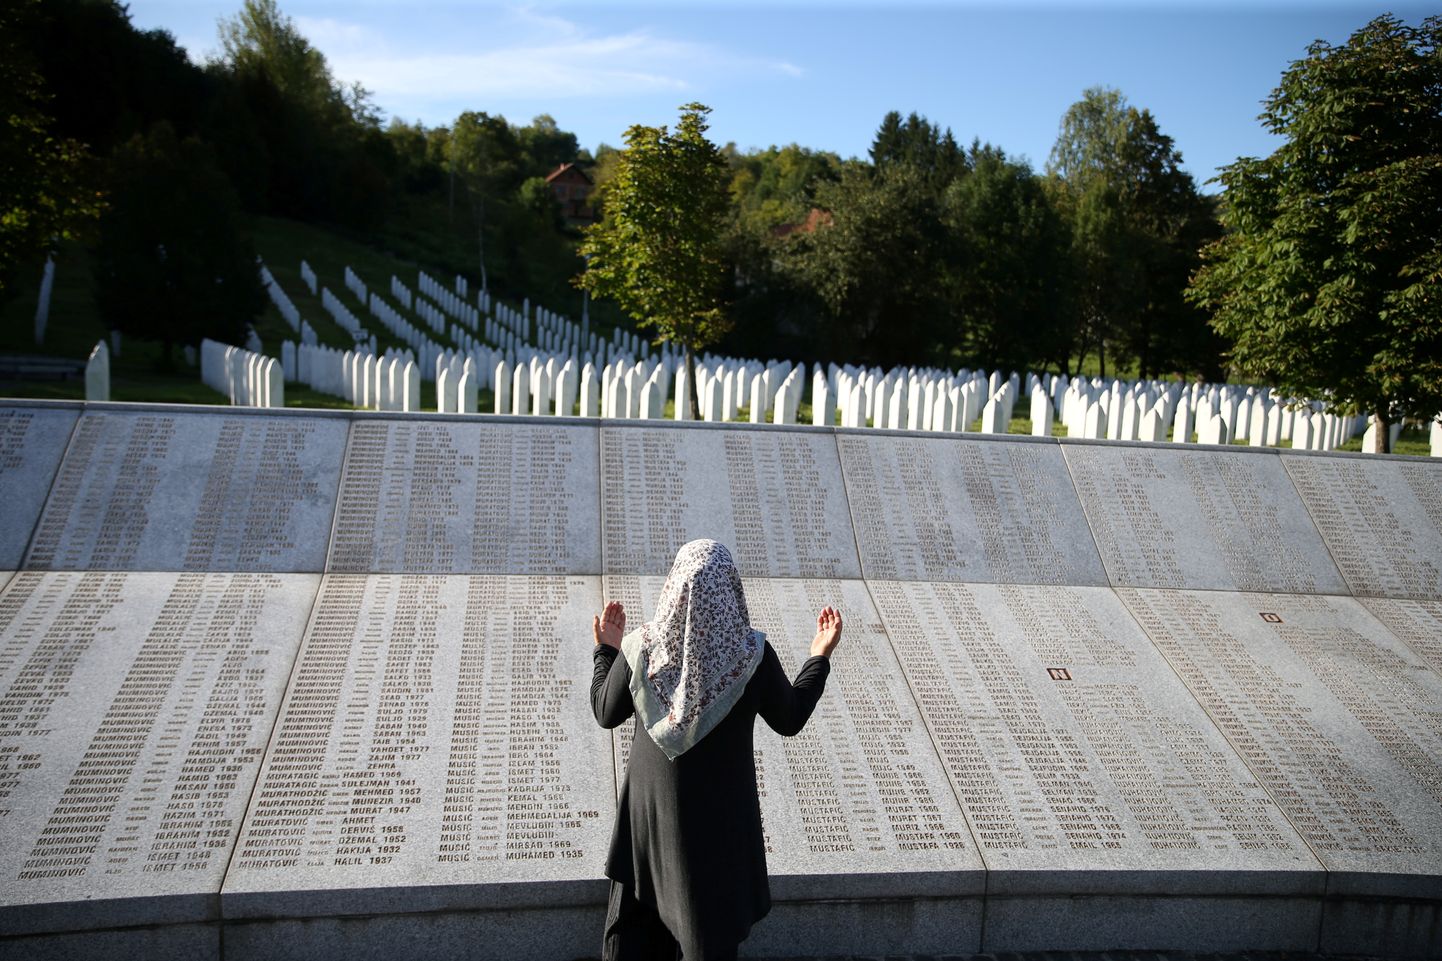 Srebrenica-Potocari genotsiidimemoriaal Bosnias.